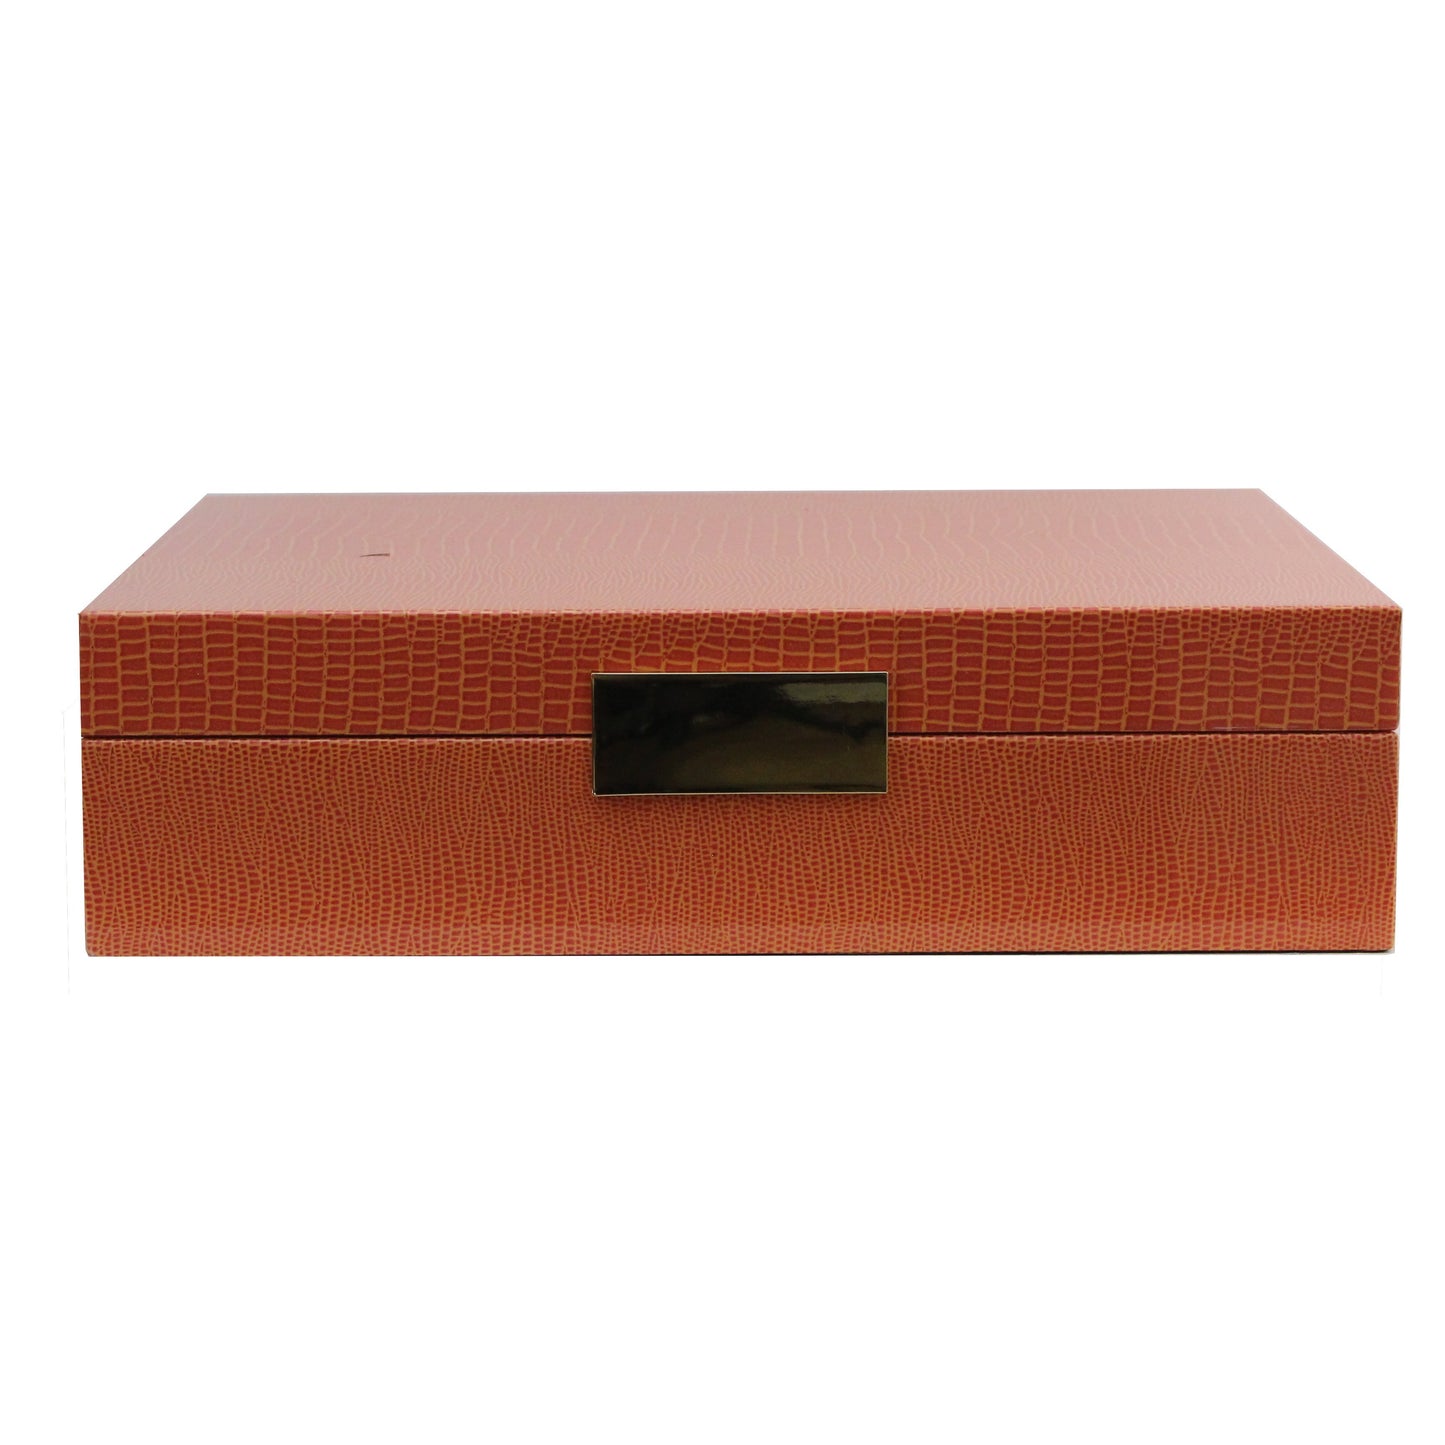 Large Orange Croc Lacquer Box with Gold - Addison Ross Ltd UK